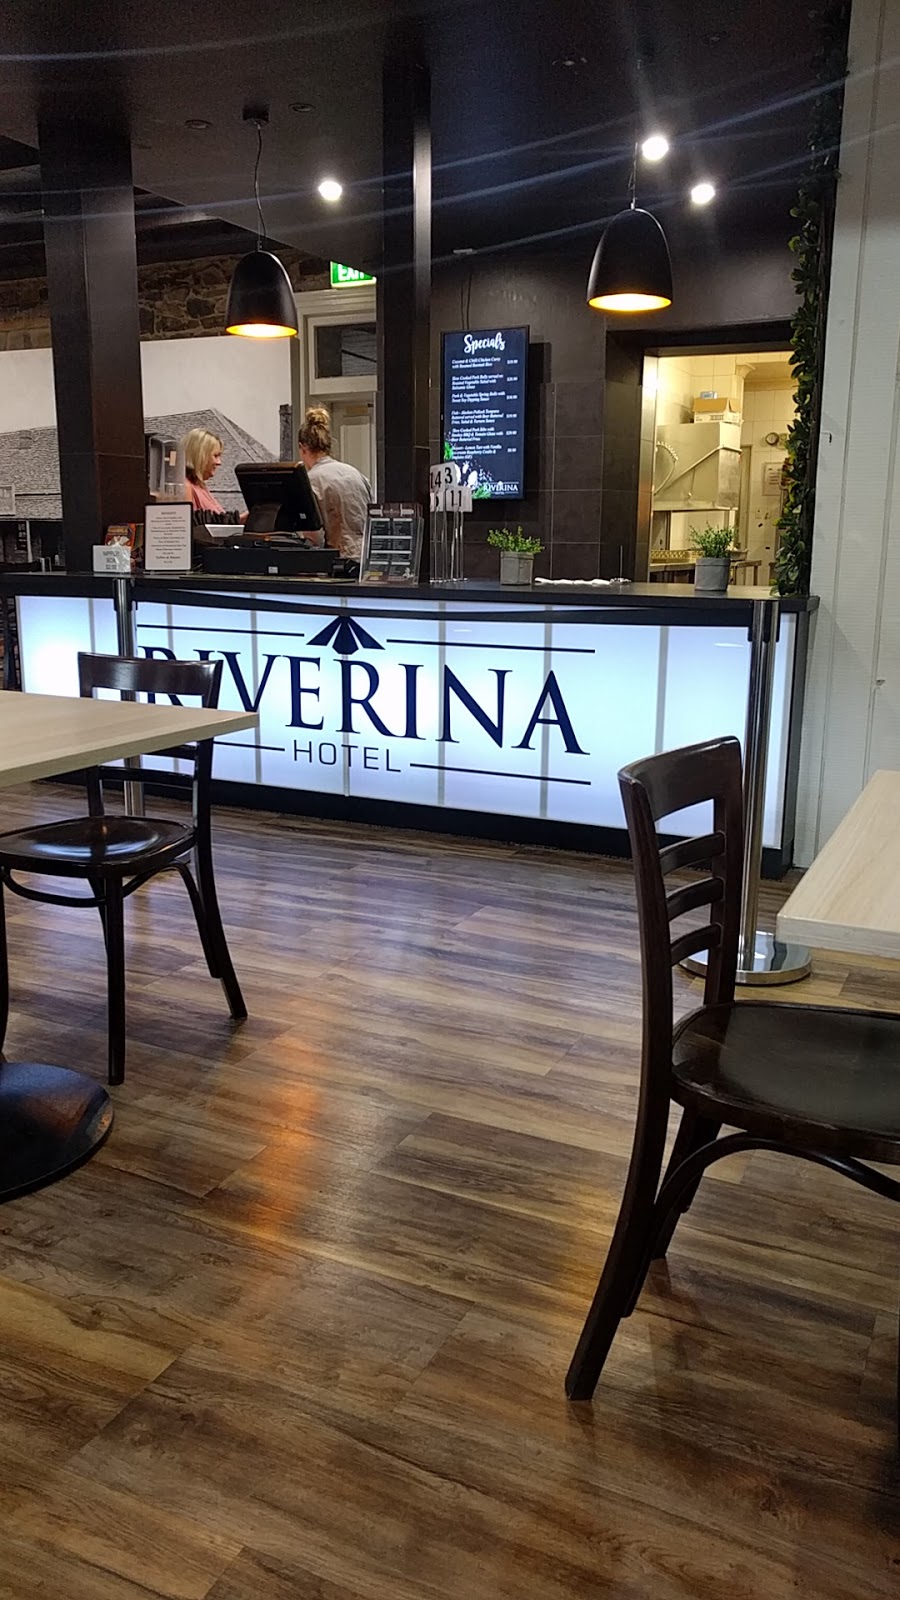 Riverina Hotel | store | 188 Fitzmaurice St, Wagga Wagga NSW 2650, Australia | 0269212222 OR +61 2 6921 2222